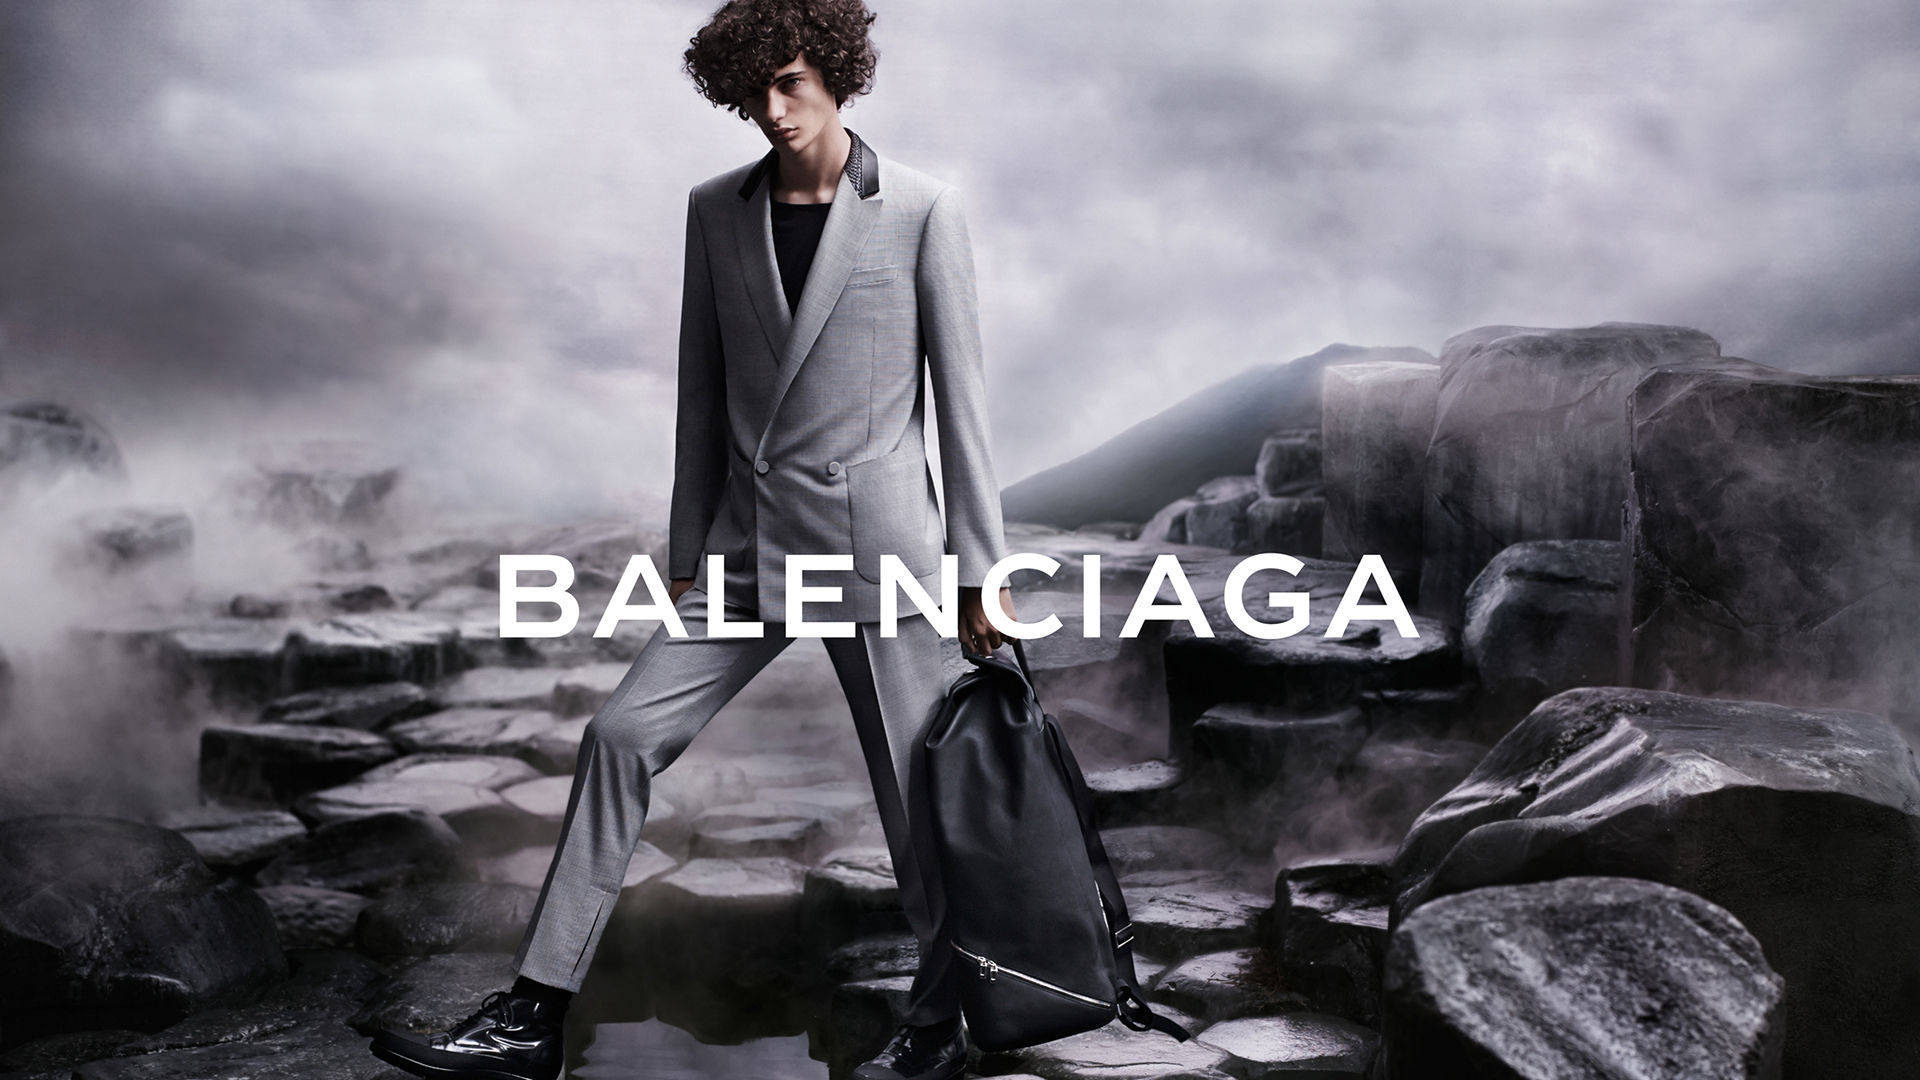 Balenciaga Male Model In Suit Wallpaper